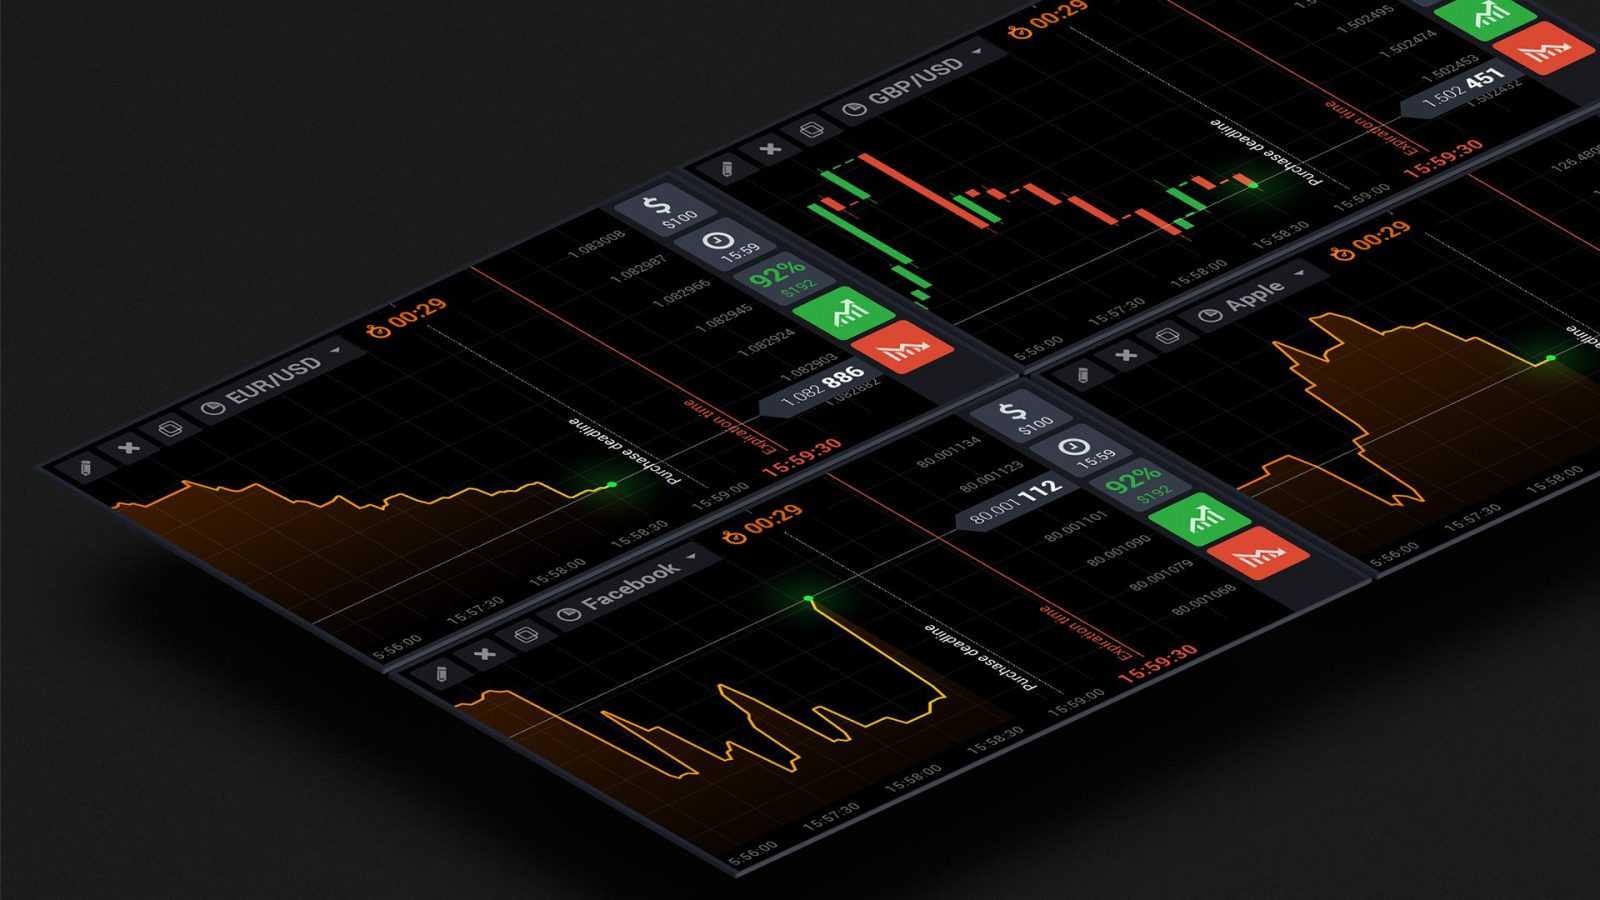 IQ Option 3.0 - New Trading Platform